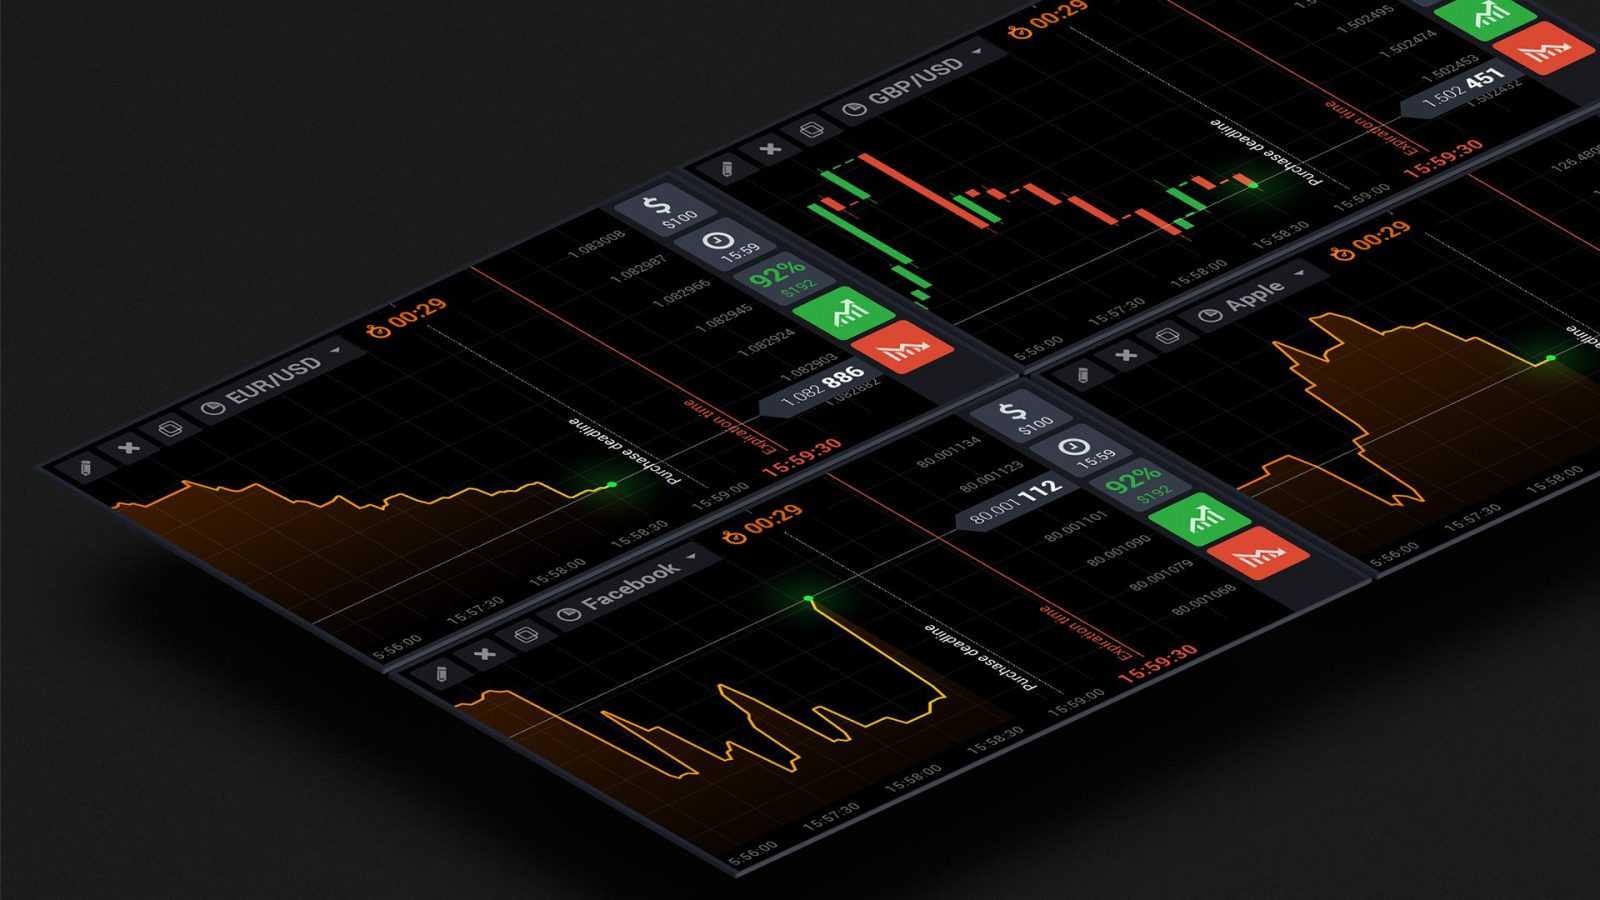 IQ Option 3.0 - New Trading Platform